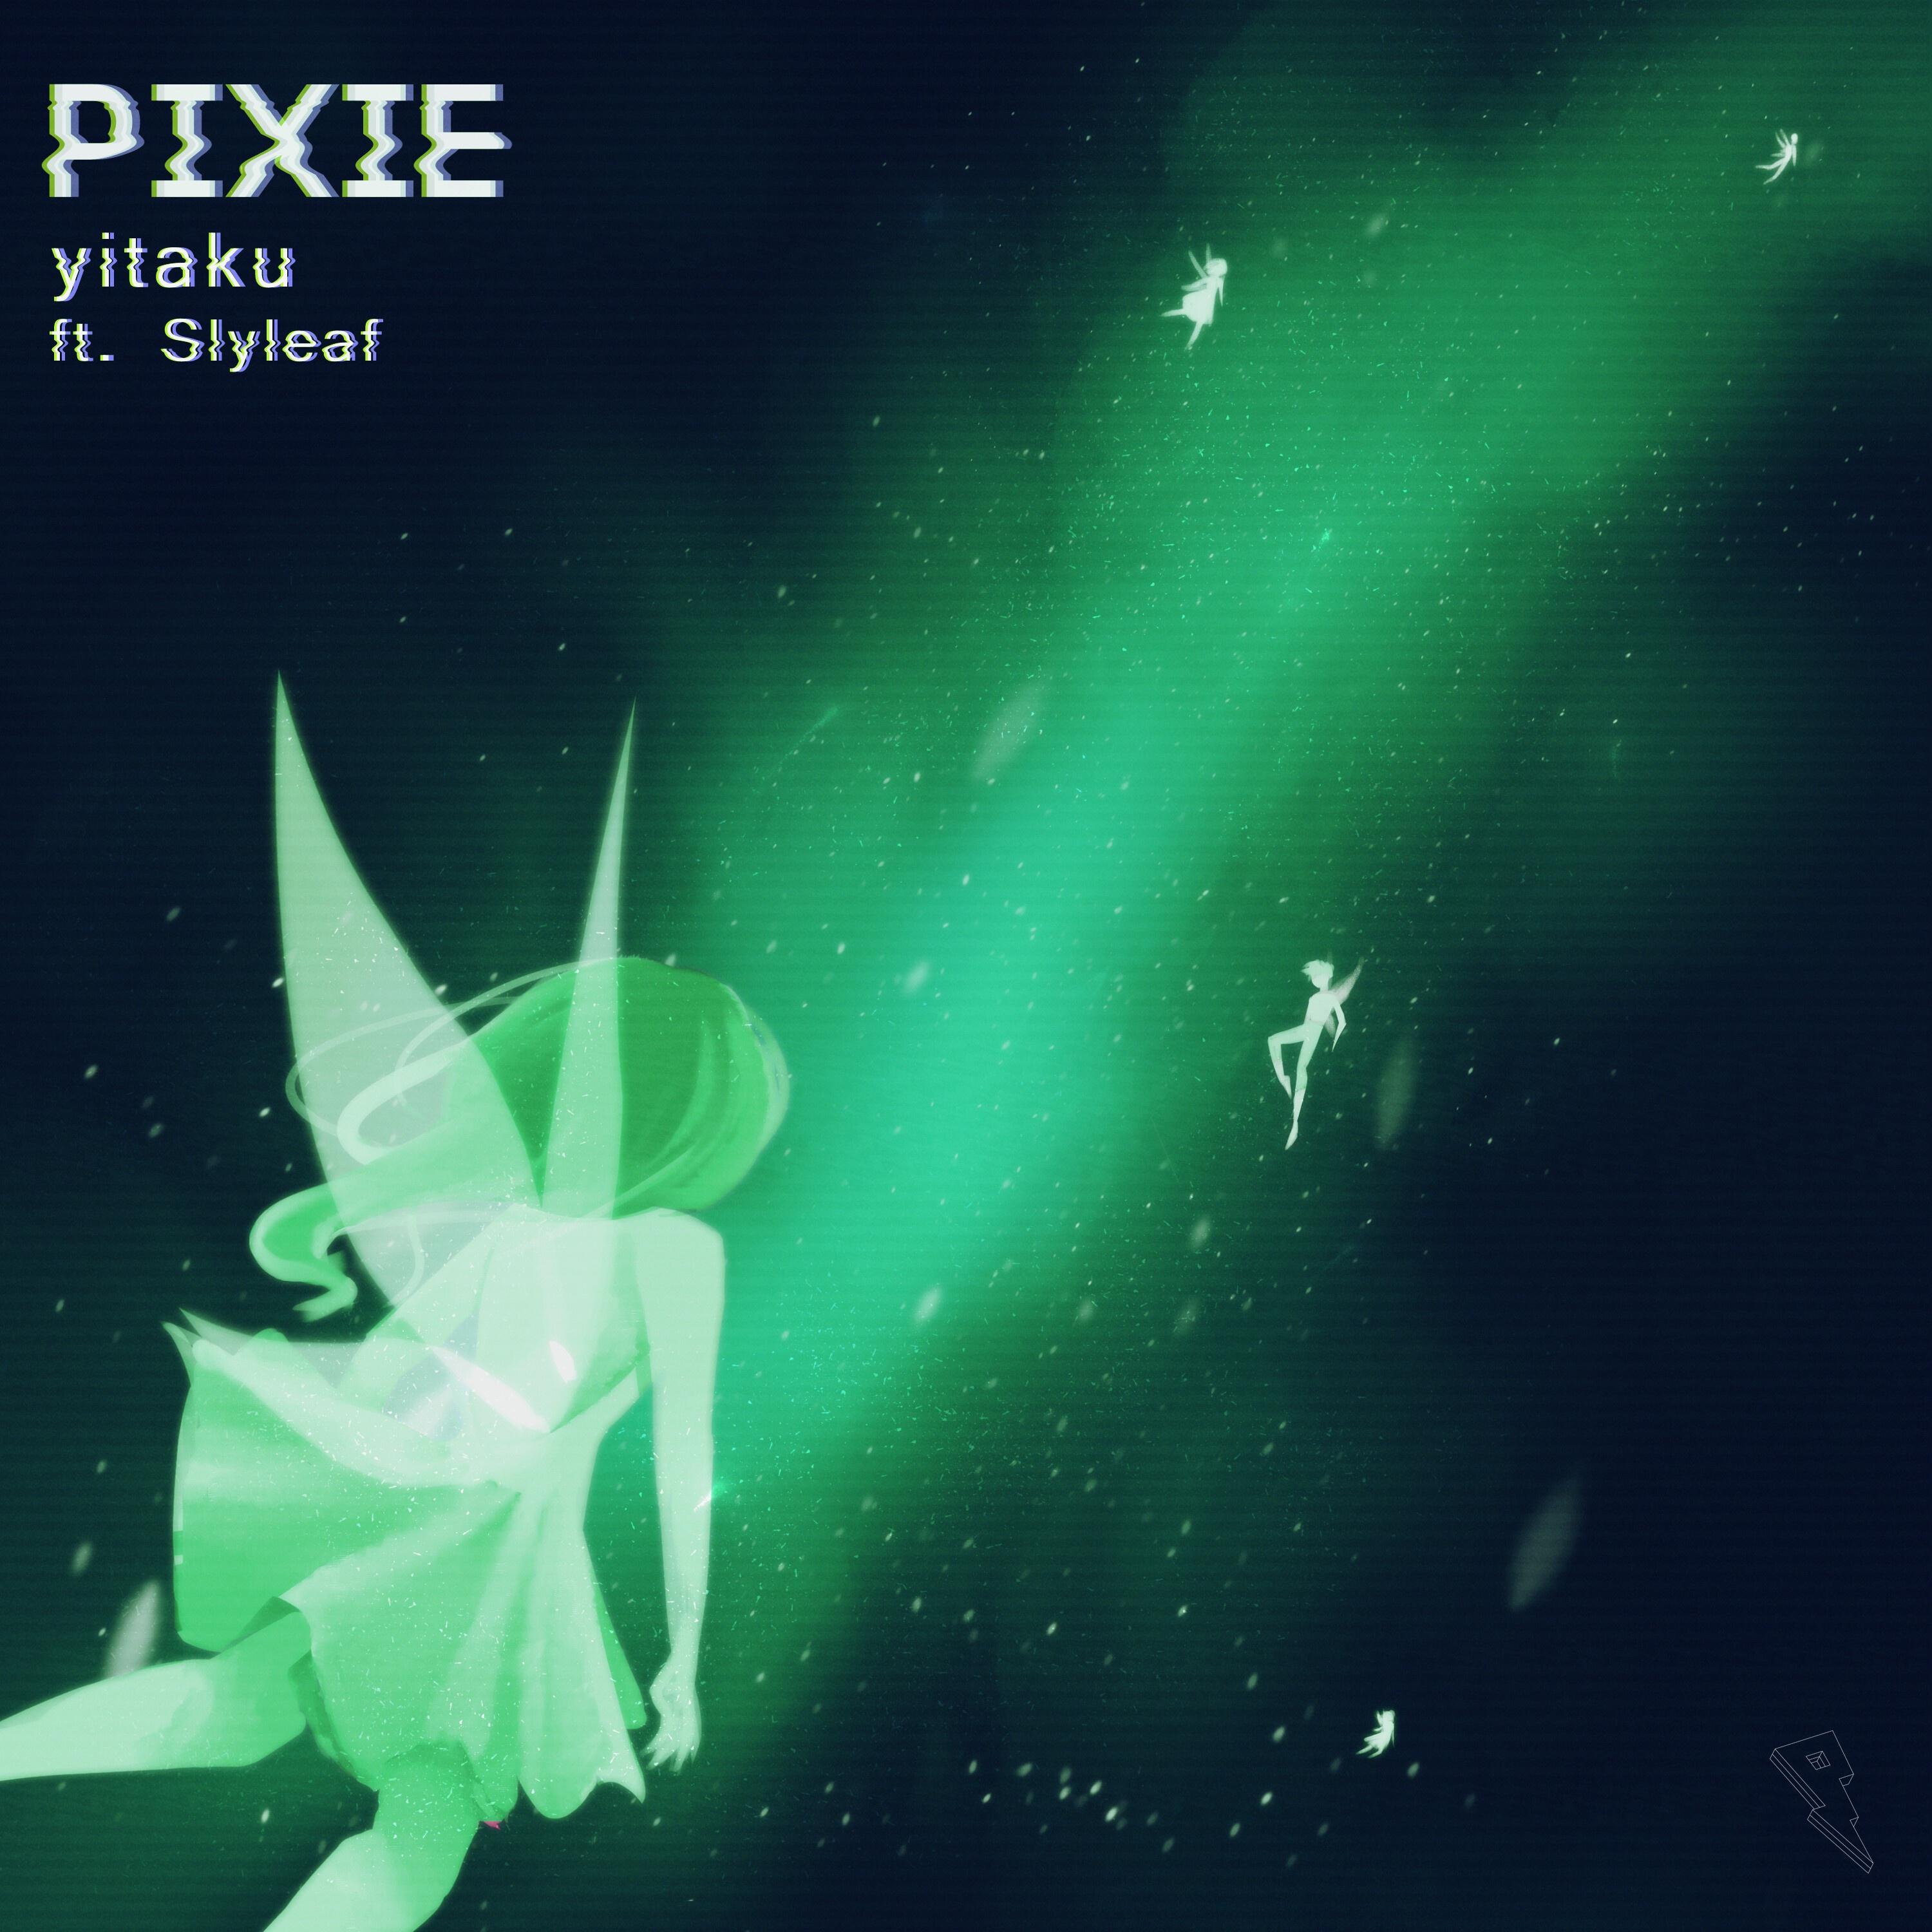 yitaku - Pixie